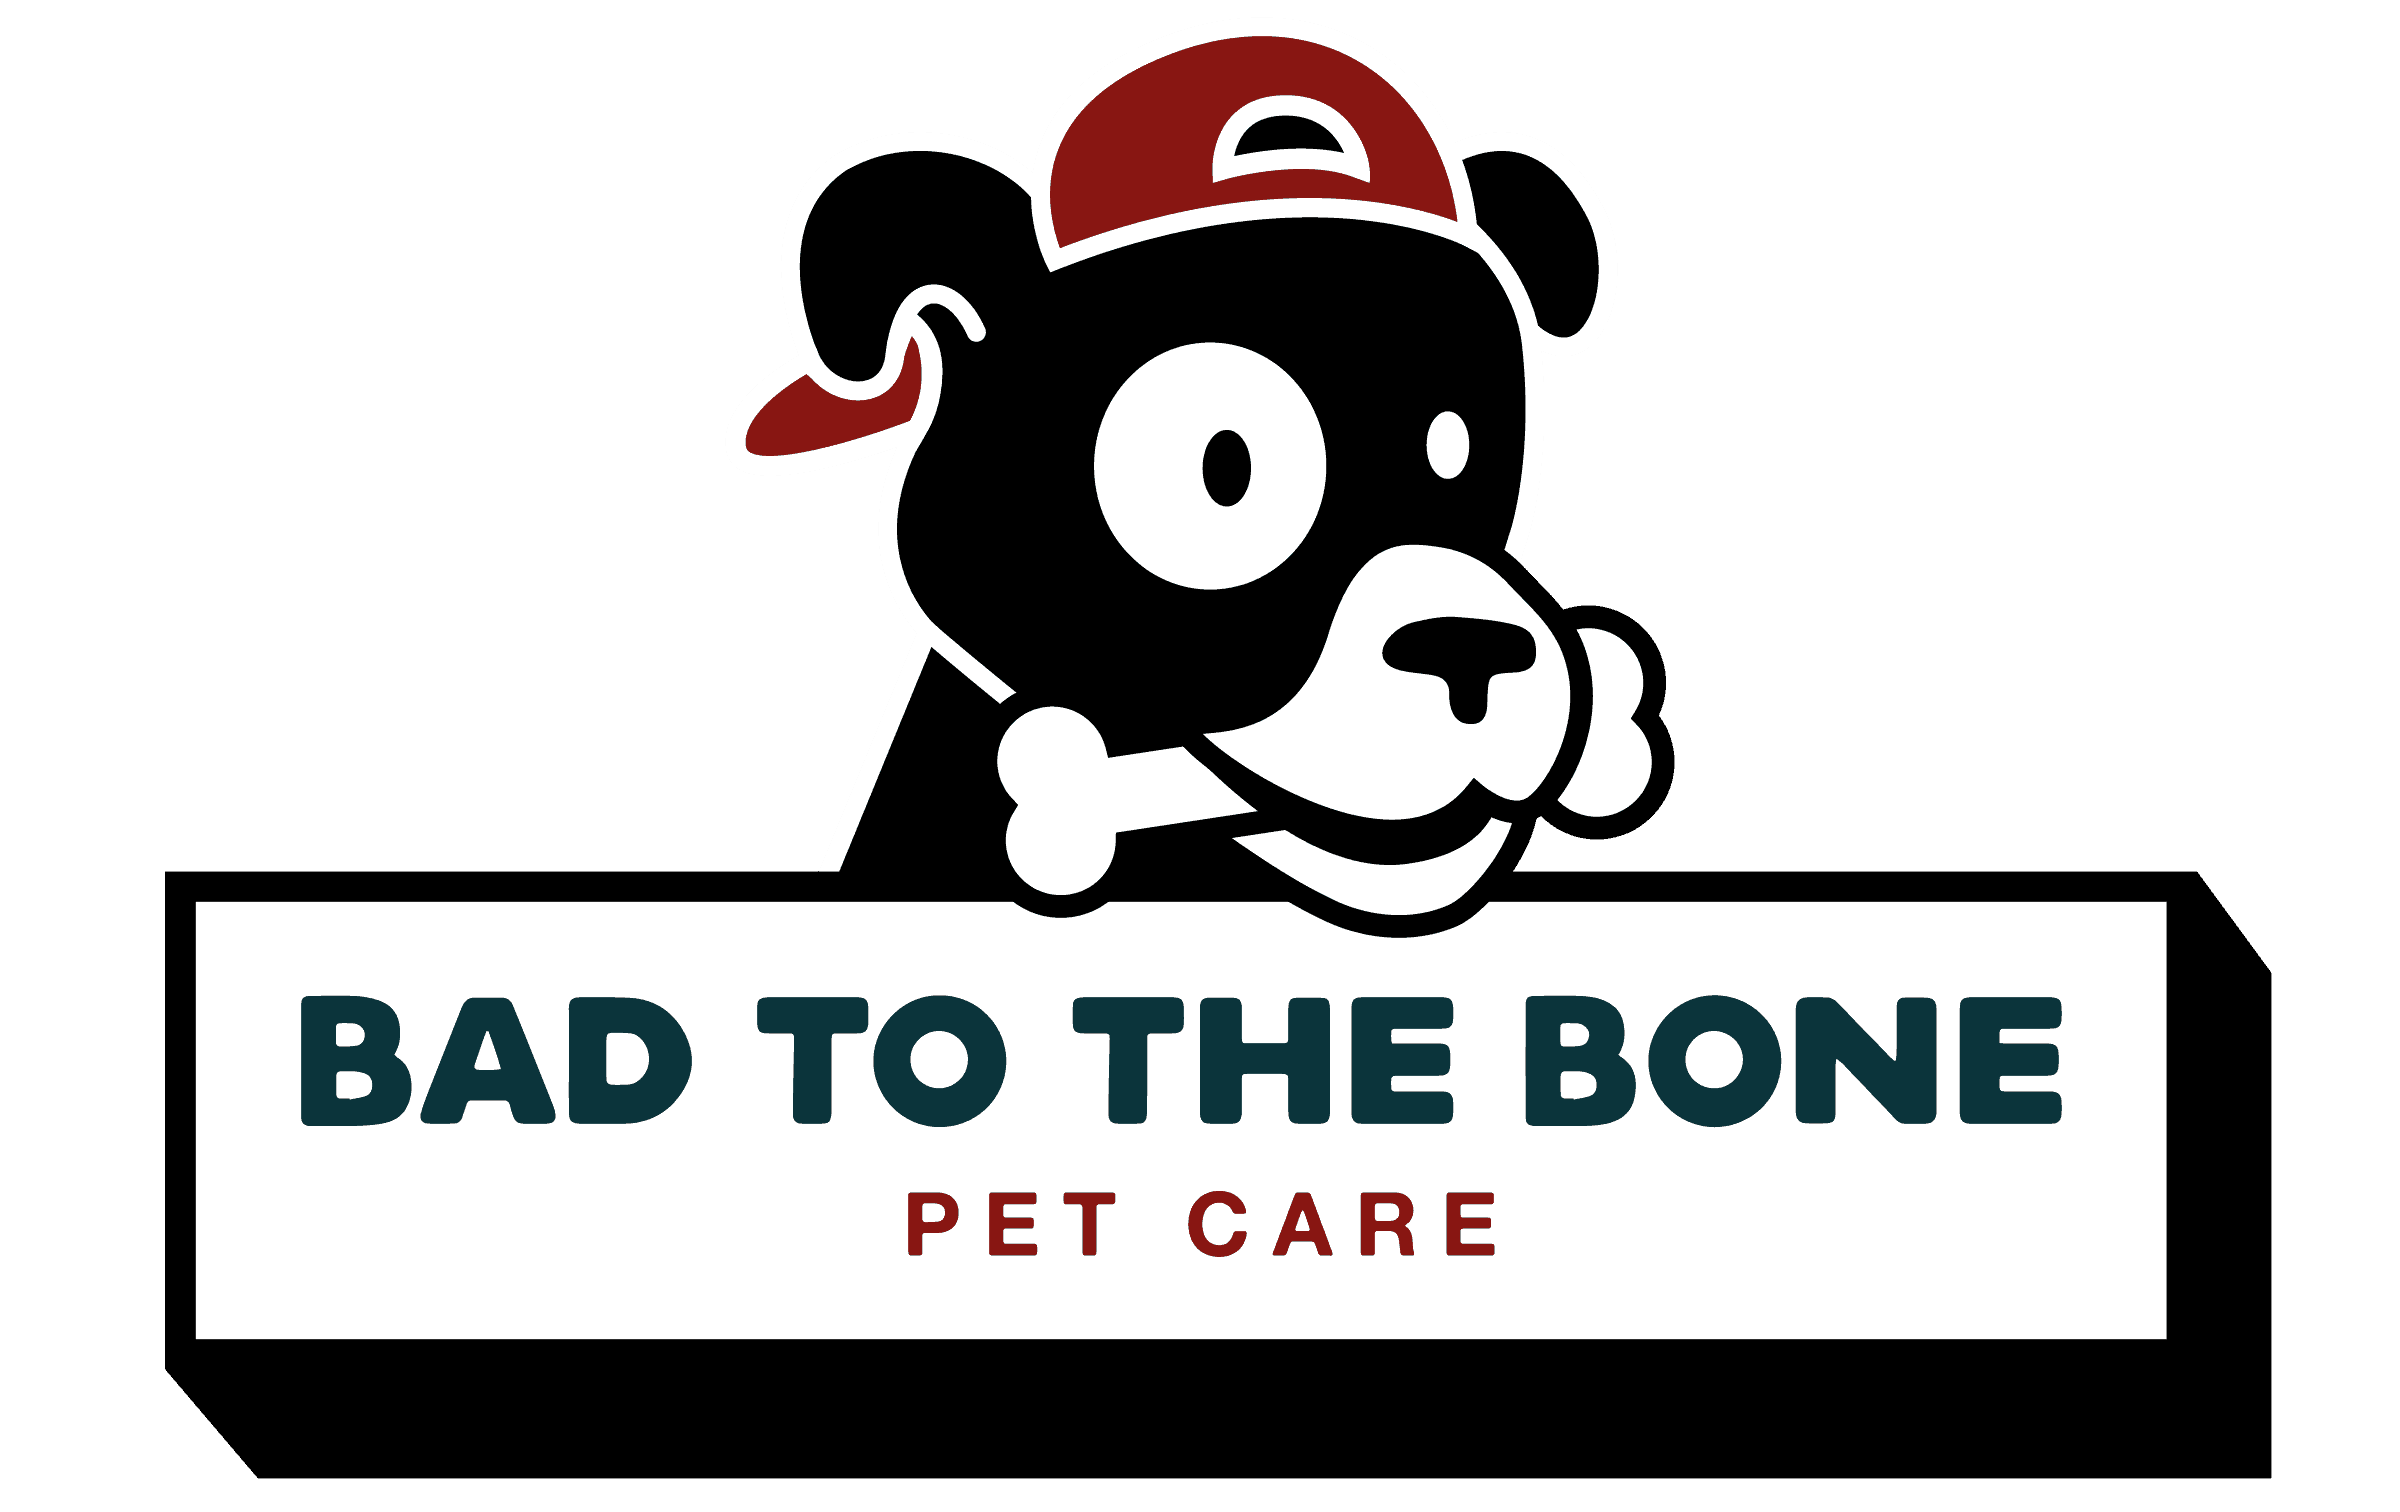 Bad to the Bone Pet Care